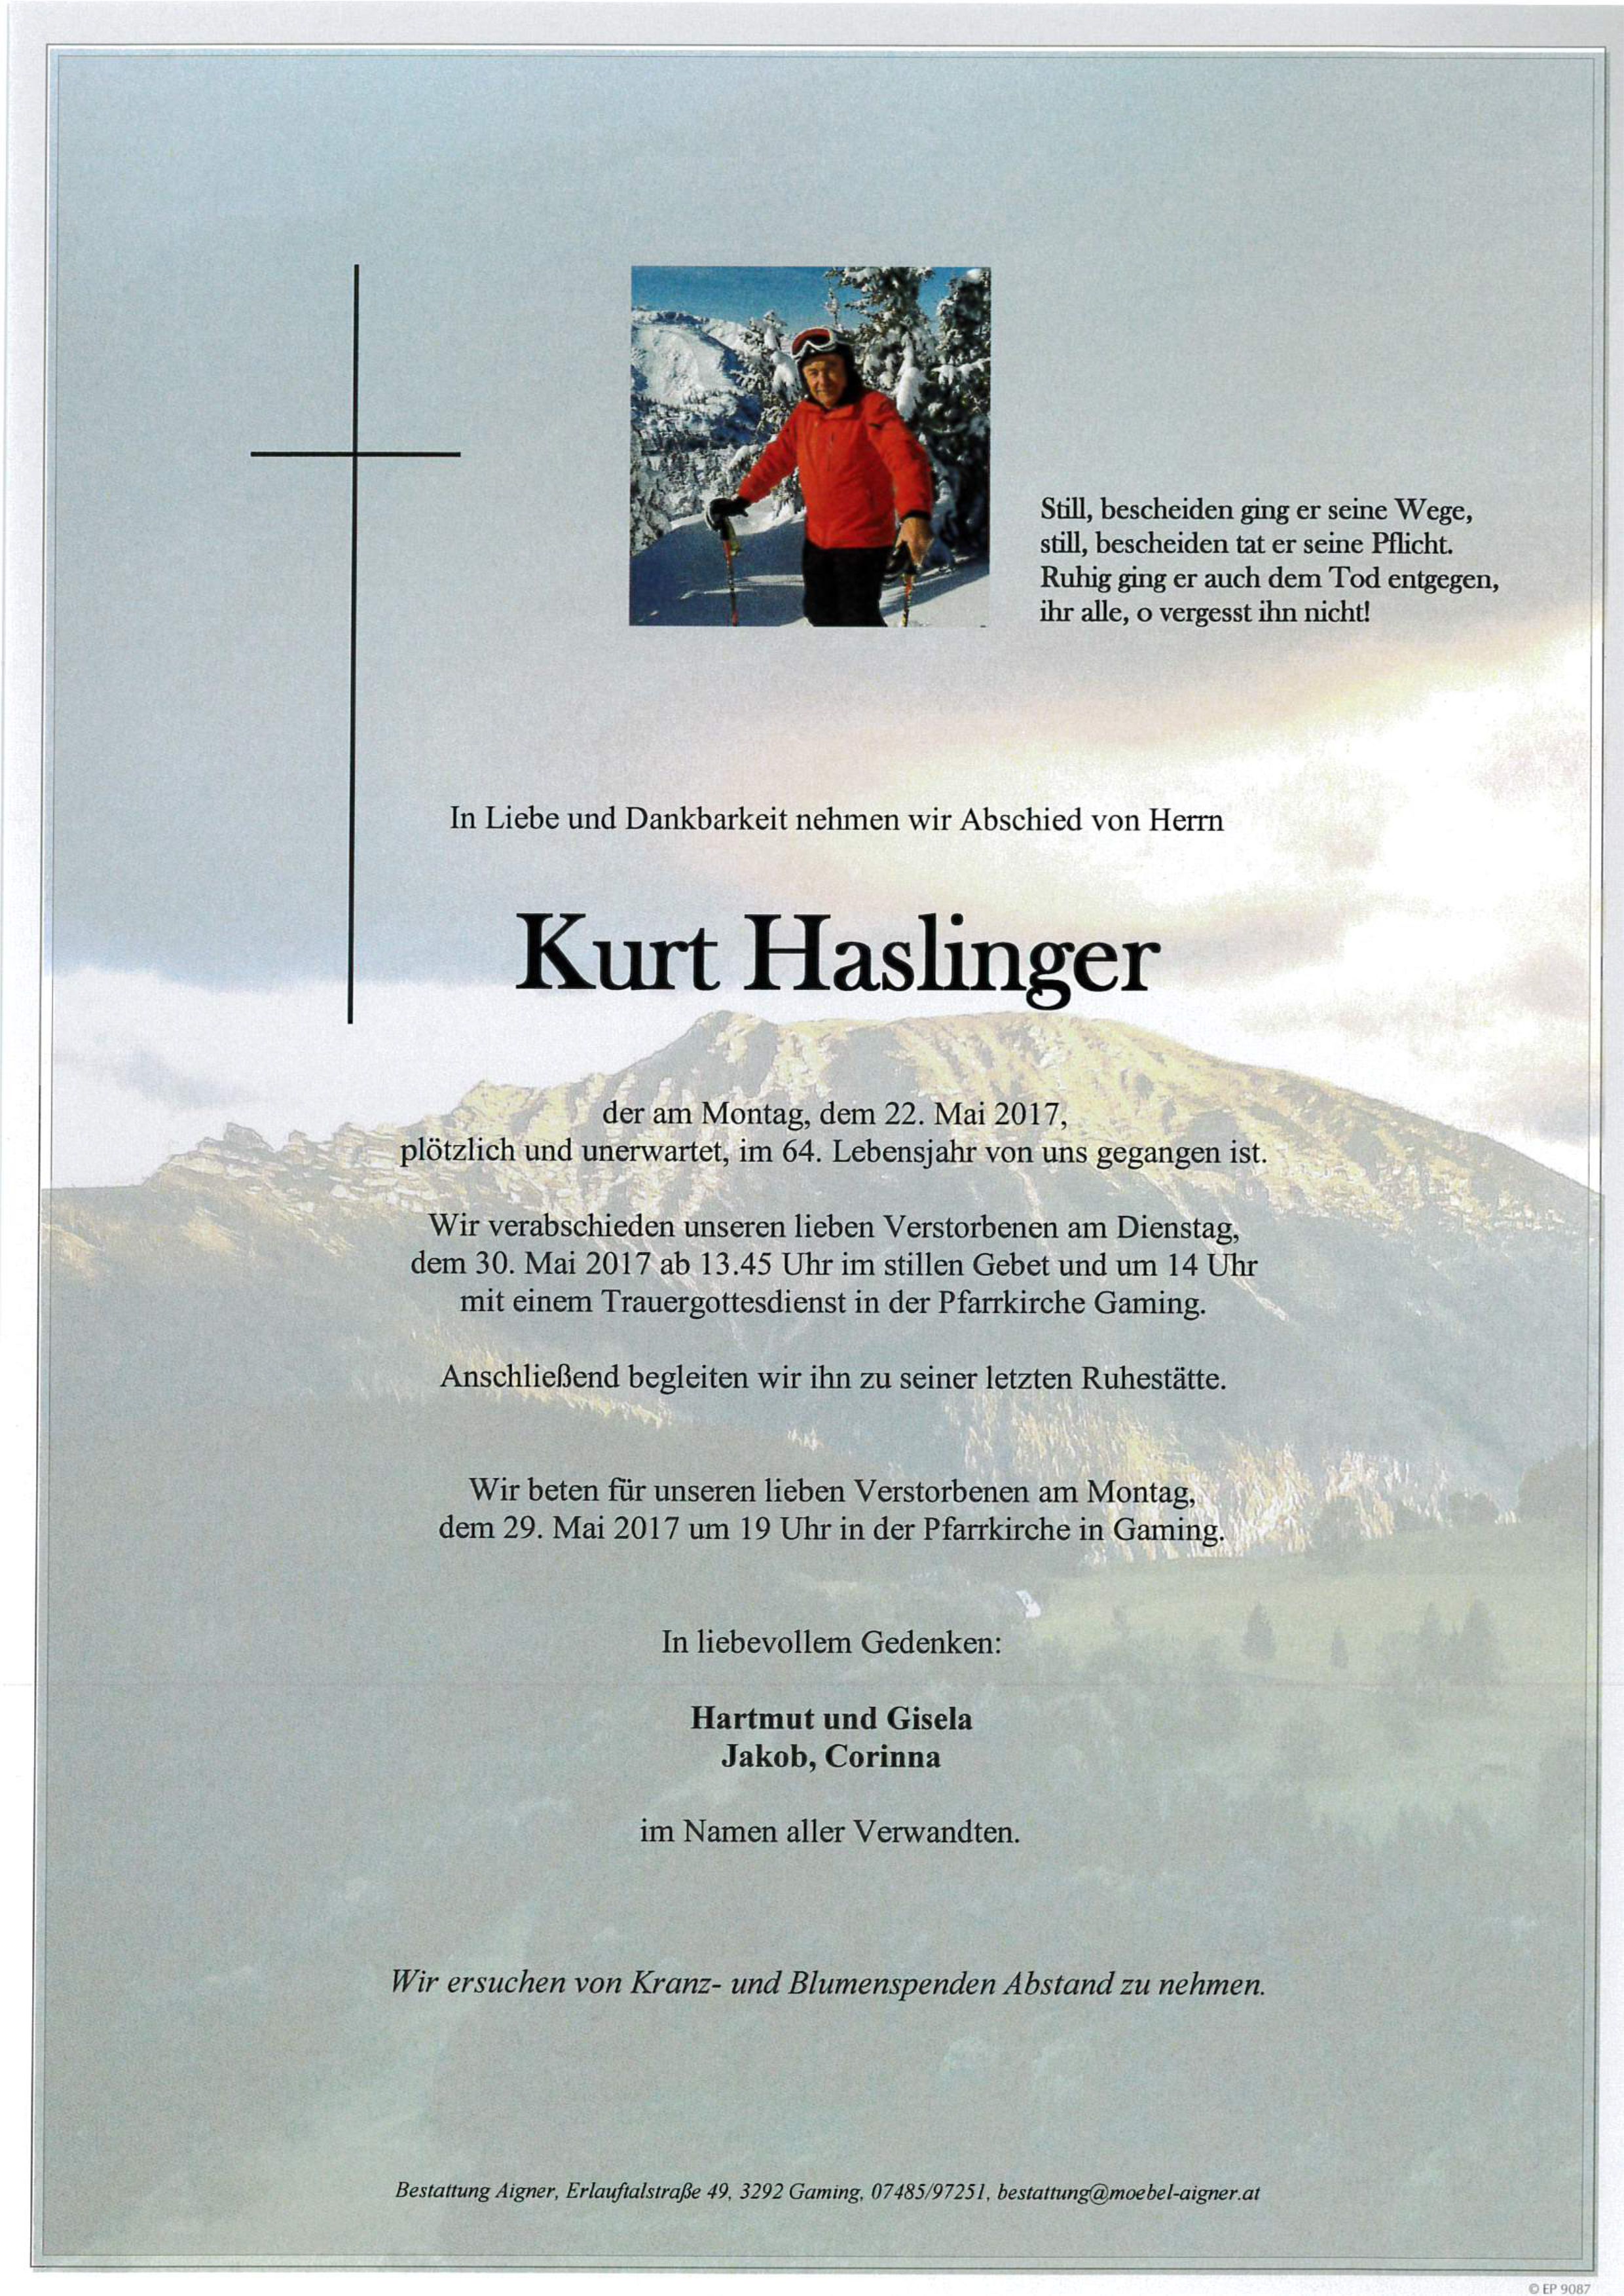 Kurt Haslinger